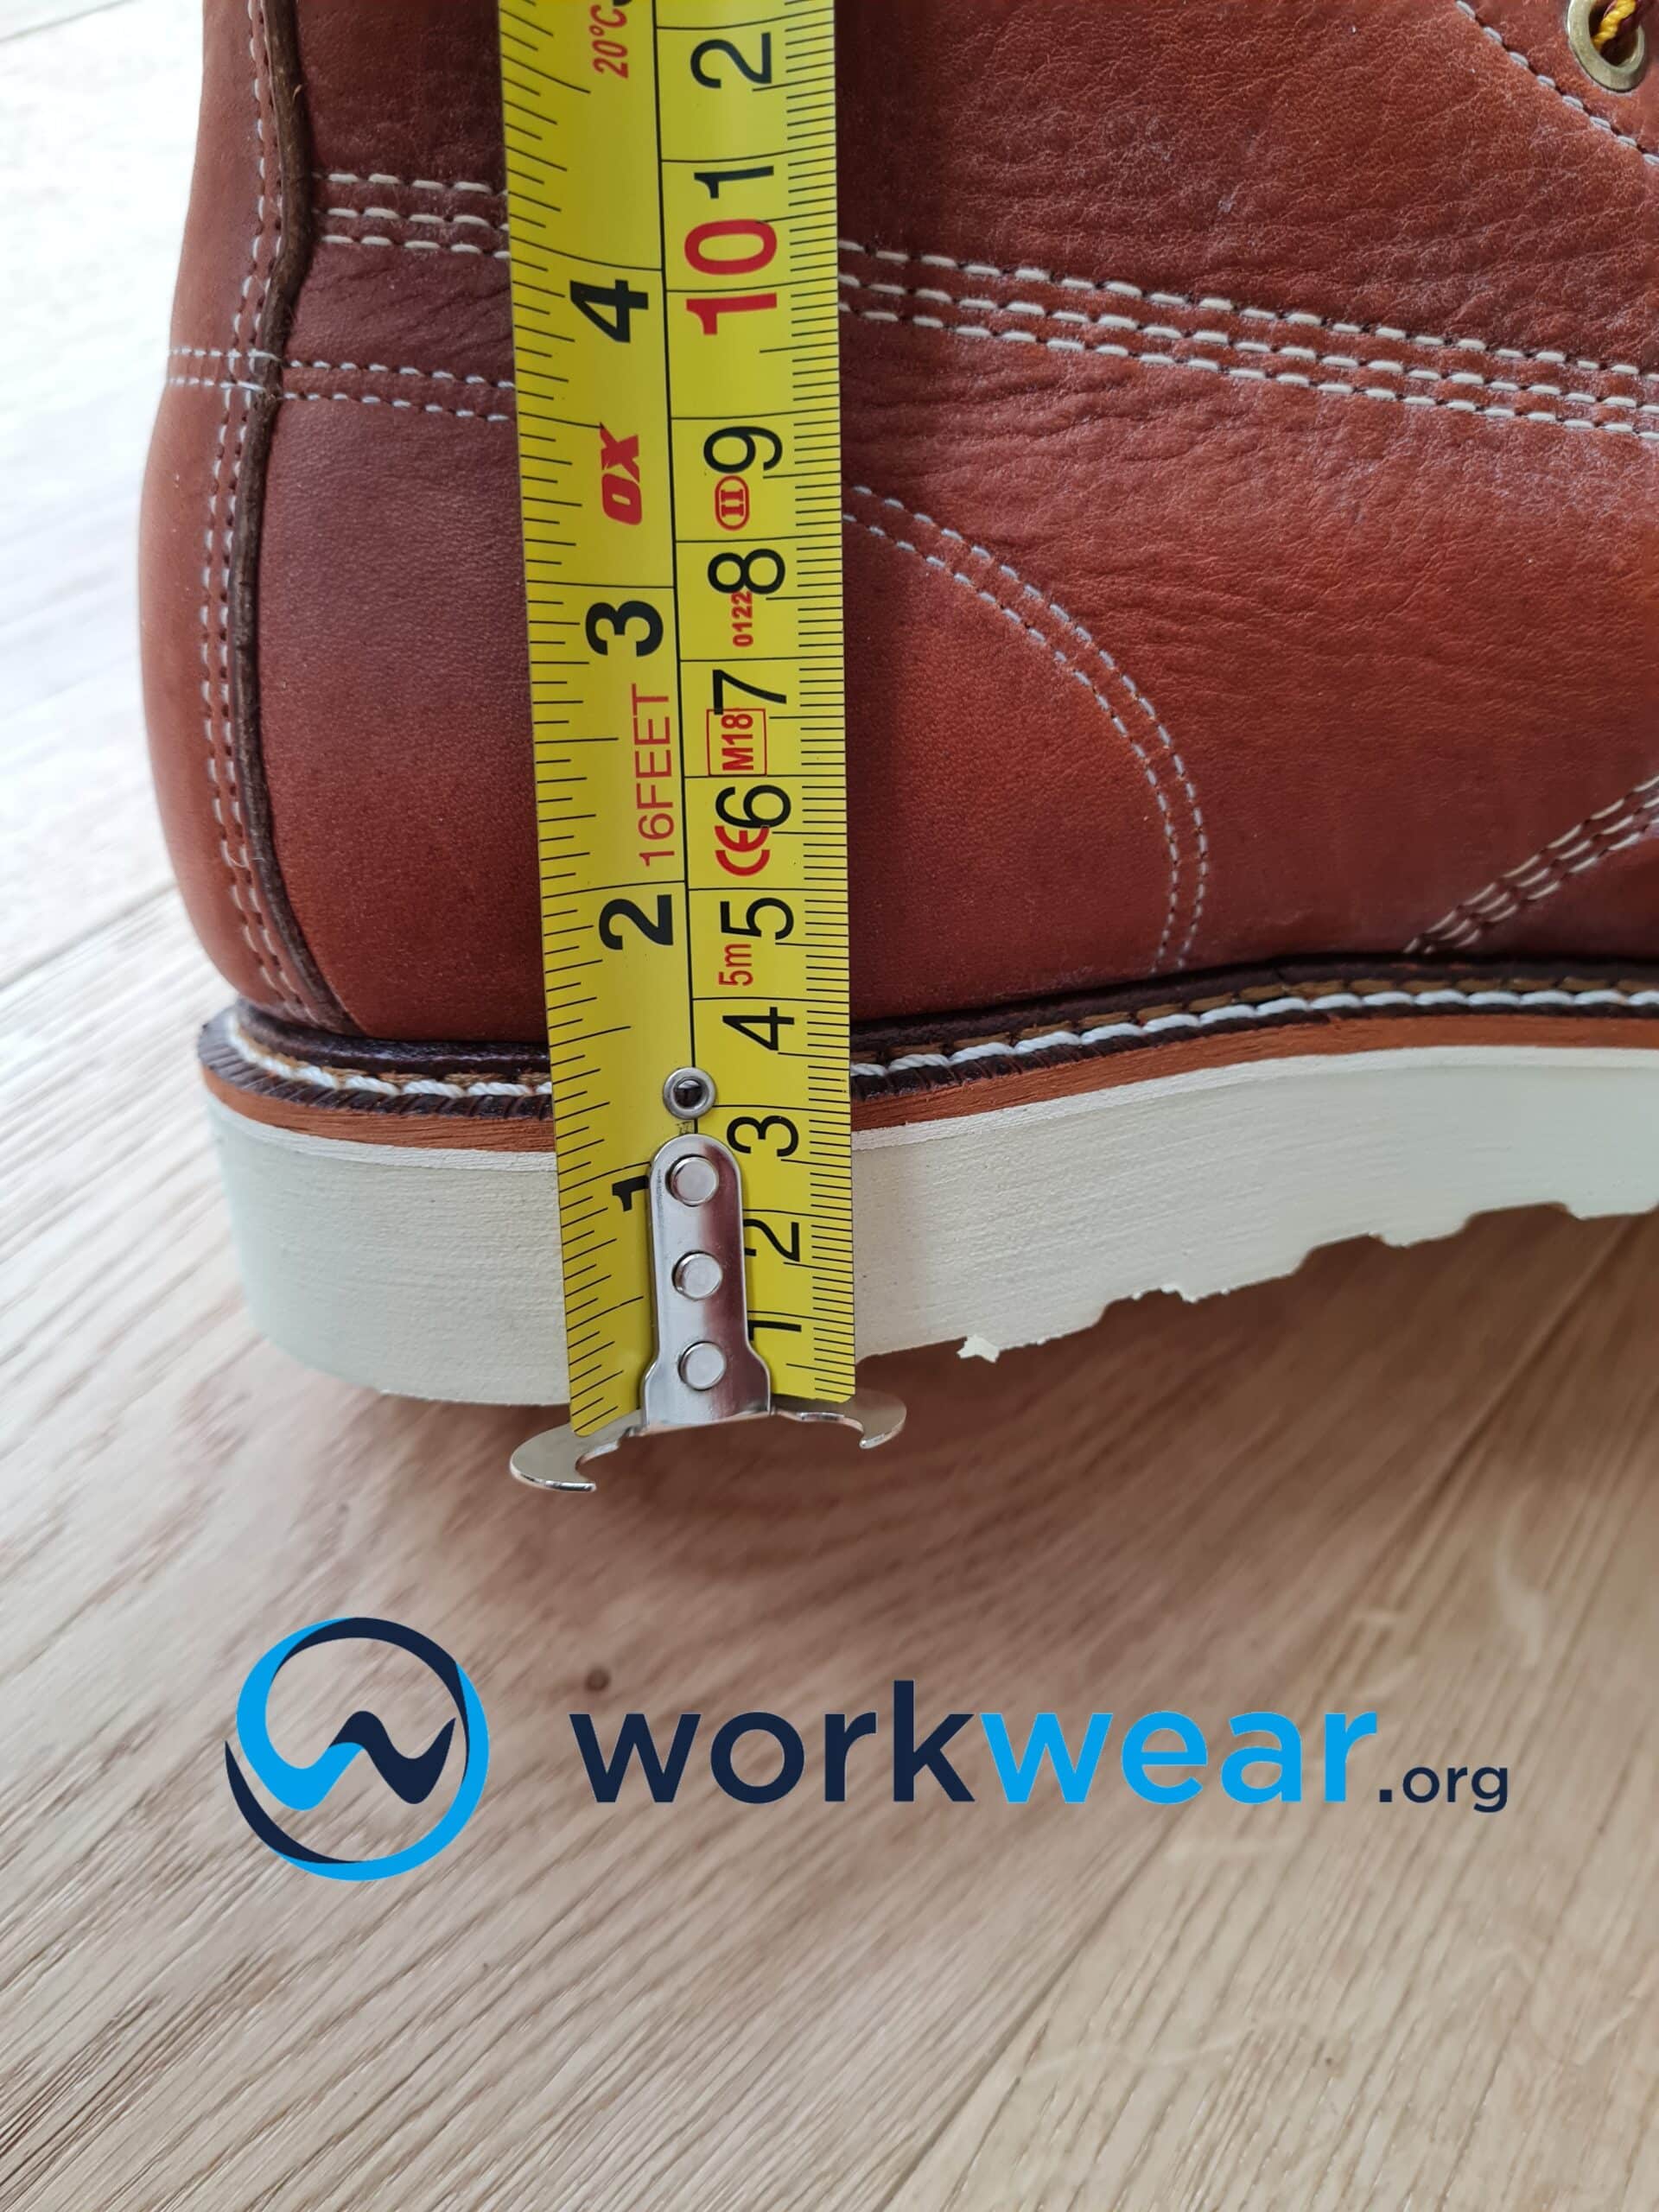 Heeled Work boots Explained | WorkWear.org